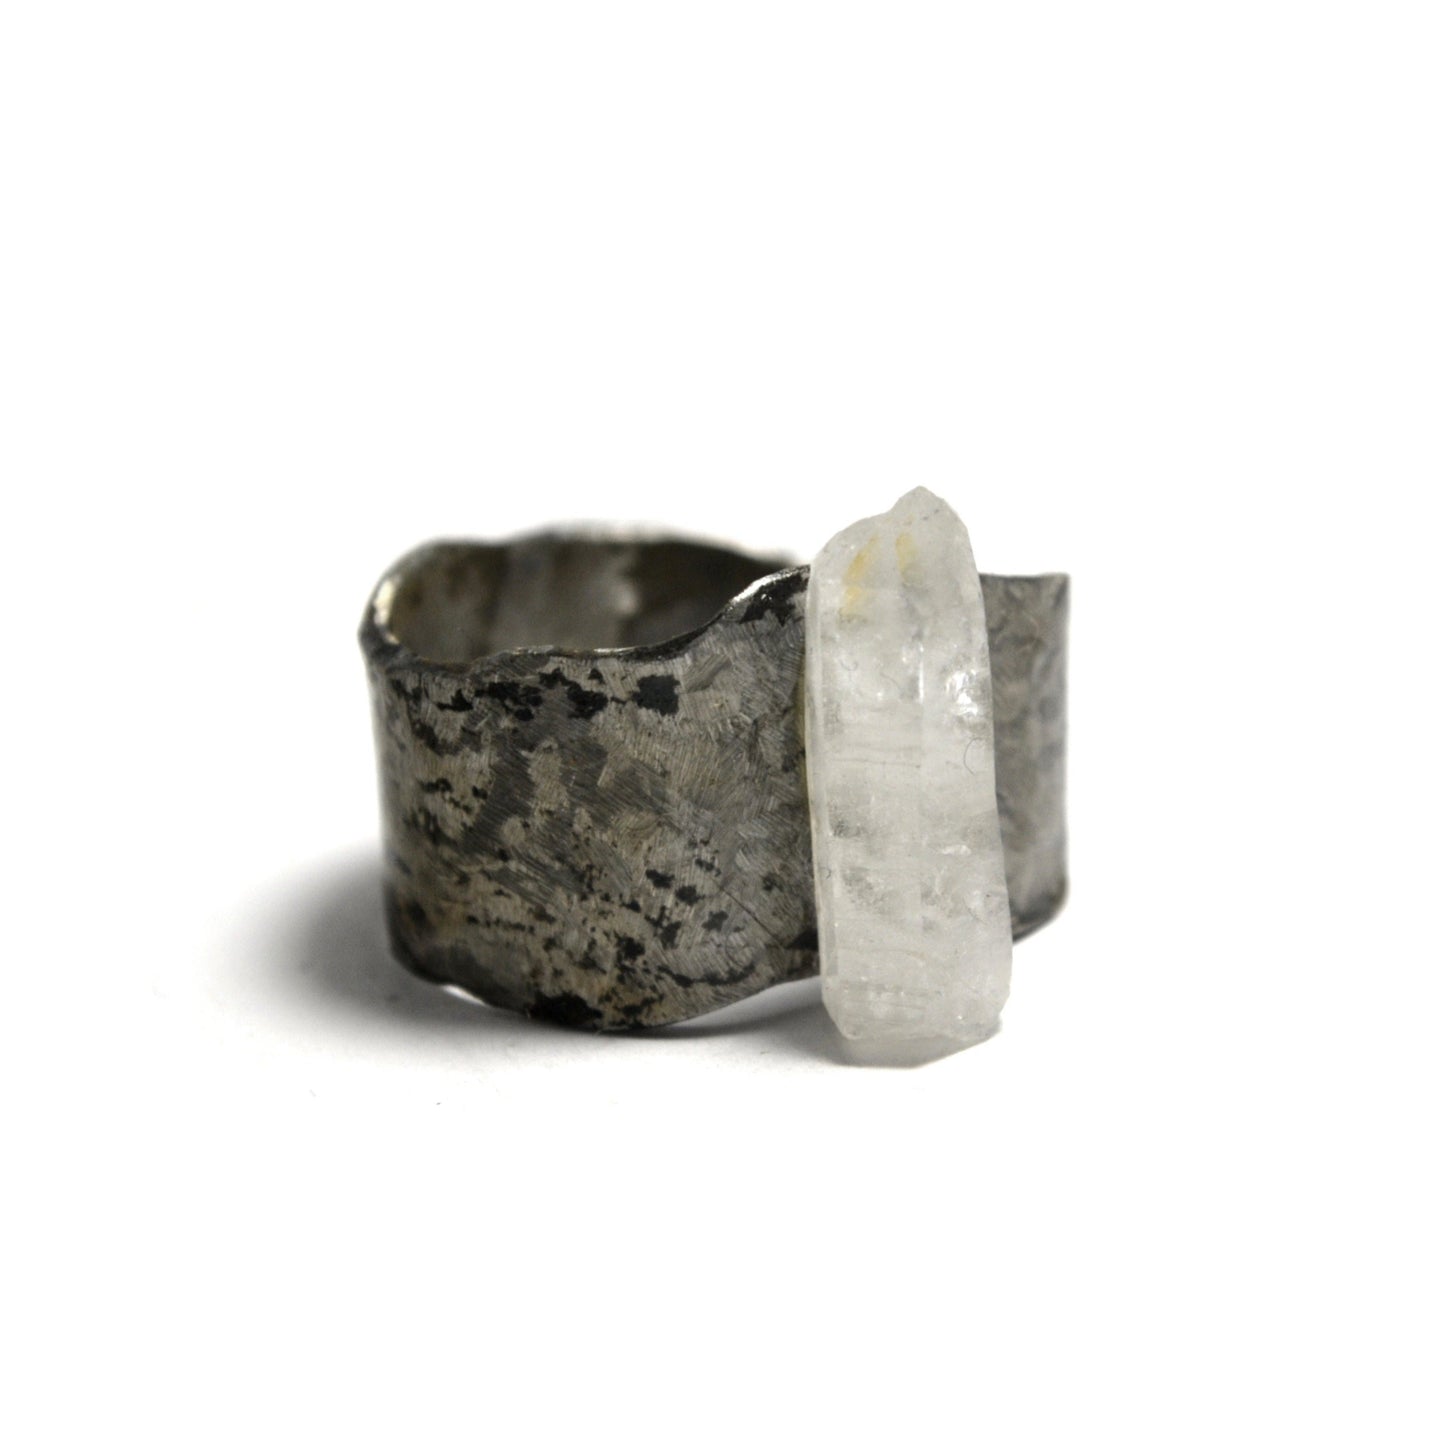 Quartz Crystal, Tool Steel, Ring by J.J. Dean